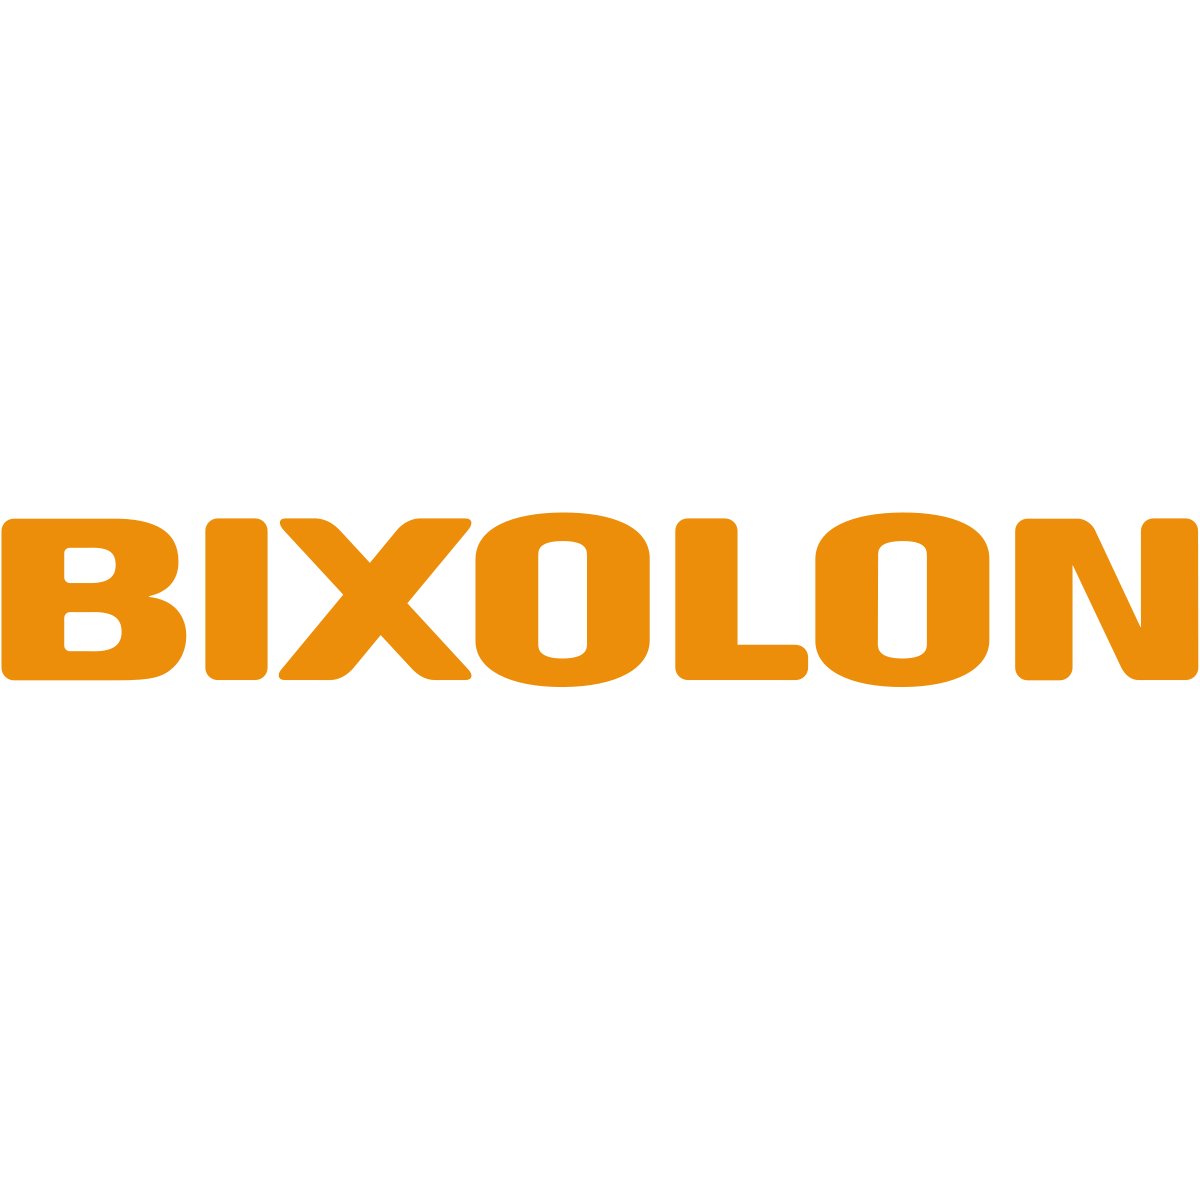 BIXOLON XD3-40d 203dpi USB Peeler Serial Ethernet 4 inch - Printer - Label Printer